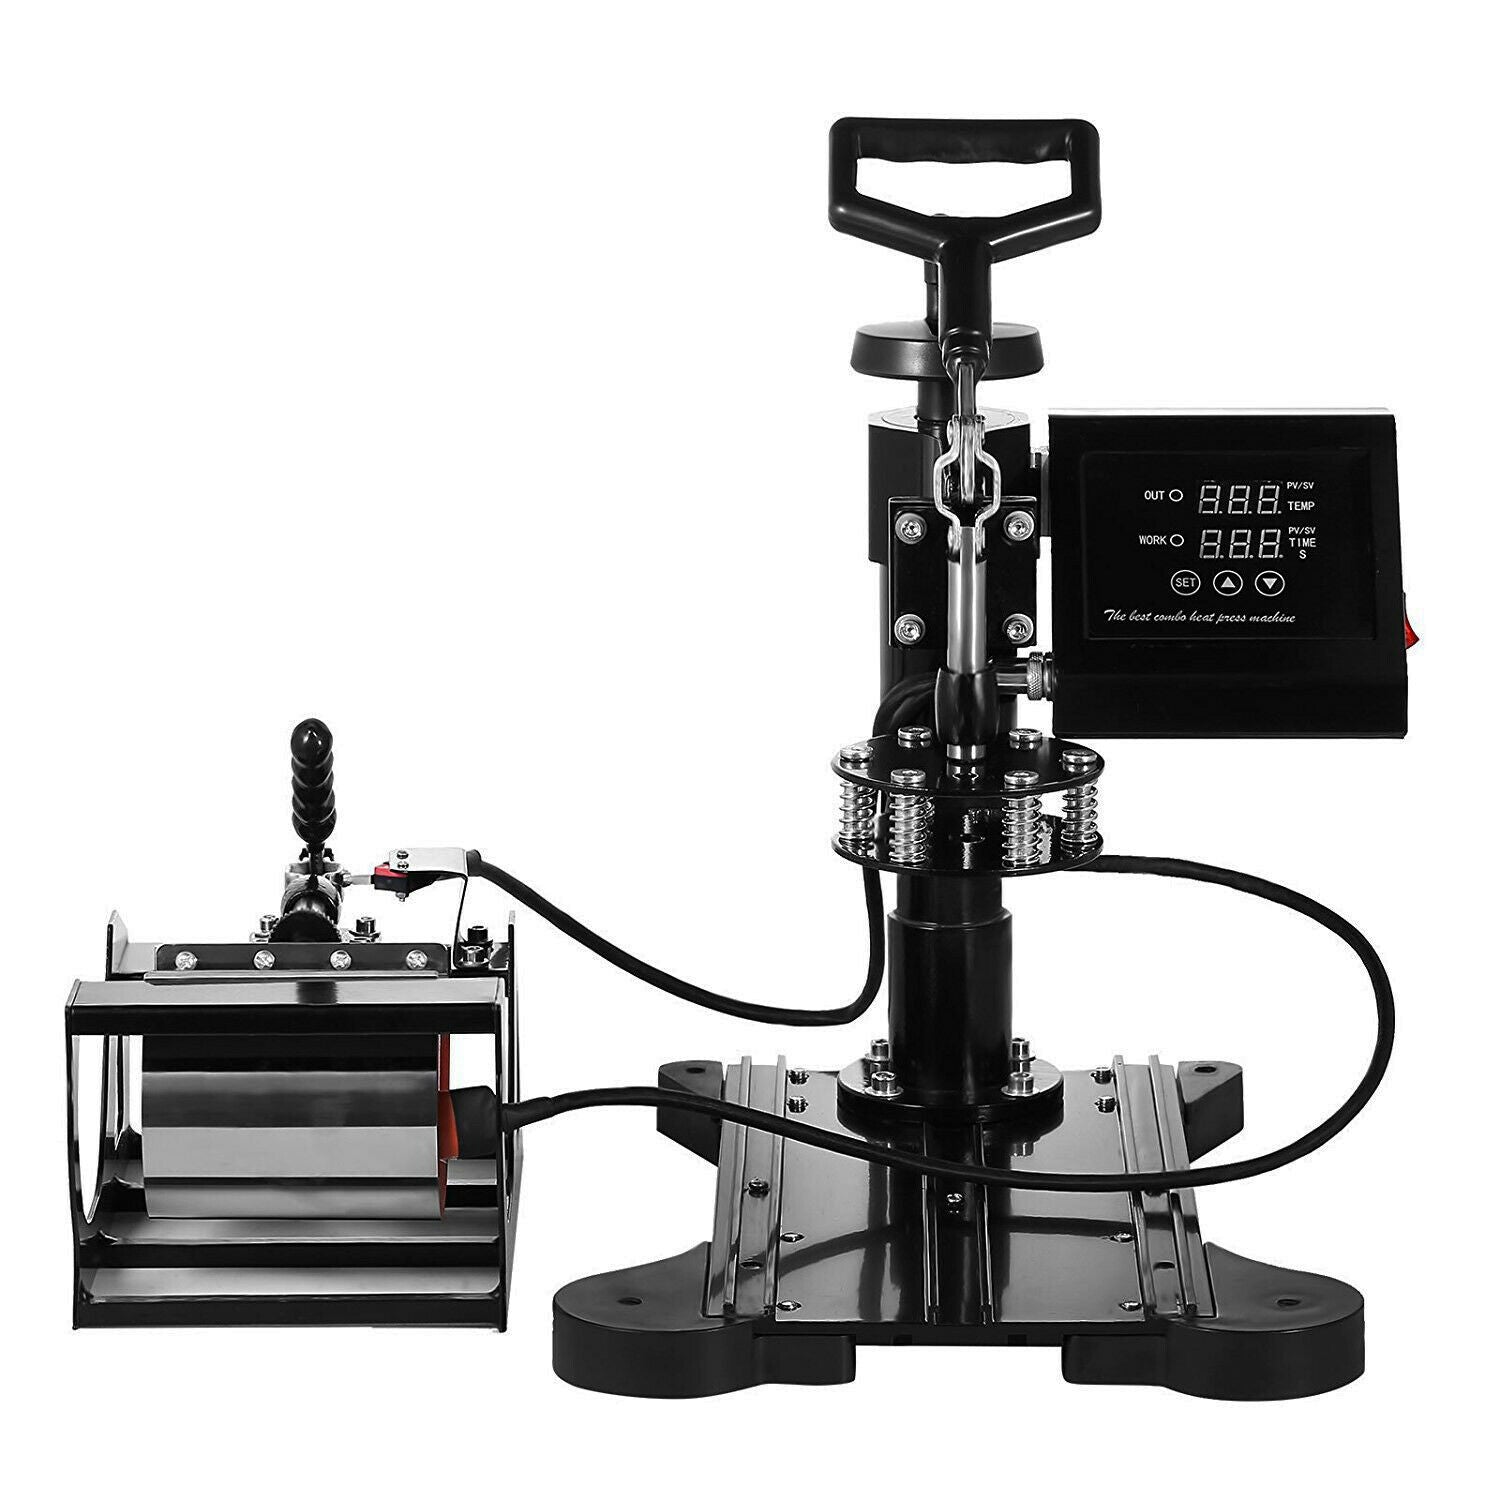 15X15 8 In 1 Heat Press Machine Digital Transfer – TeciSoft